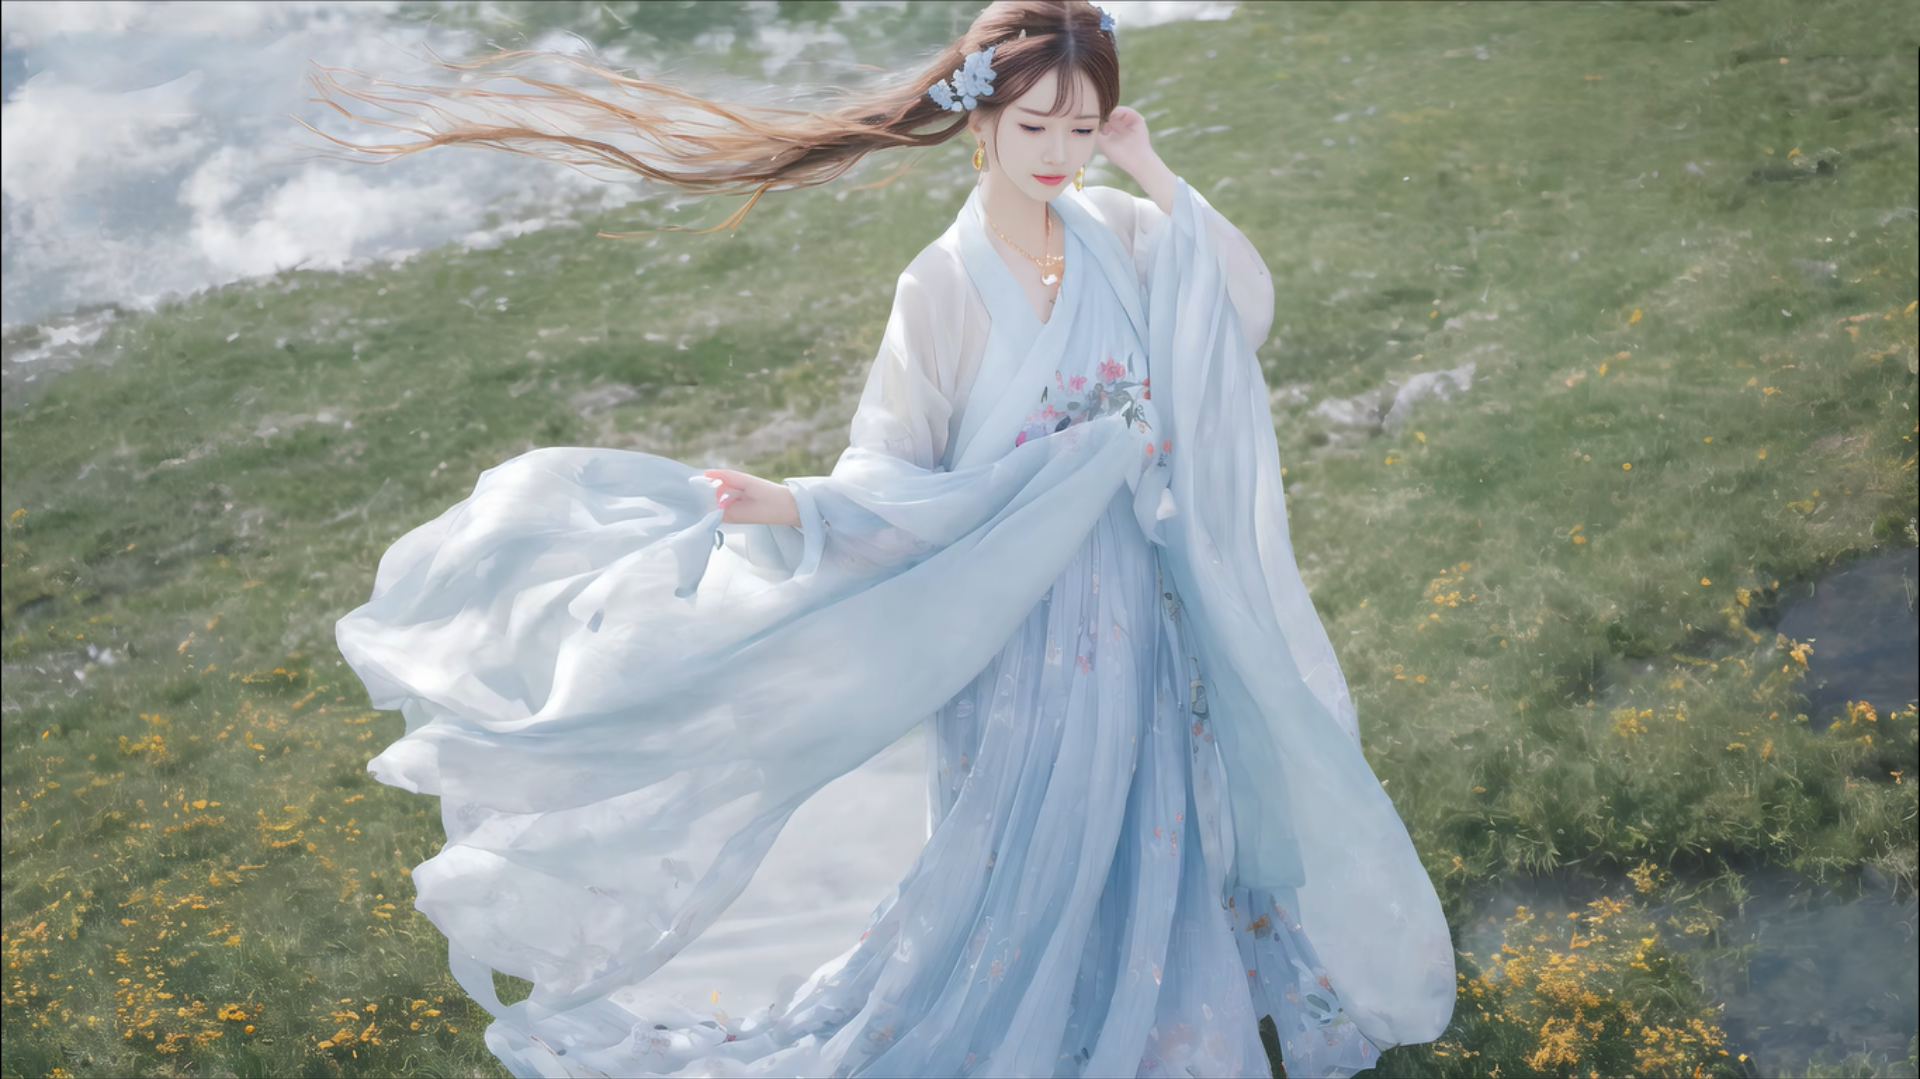 General 1920x1079 jia'q AI art Asian women long hair hair blowing in the wind wind grass earring dress standing digital art